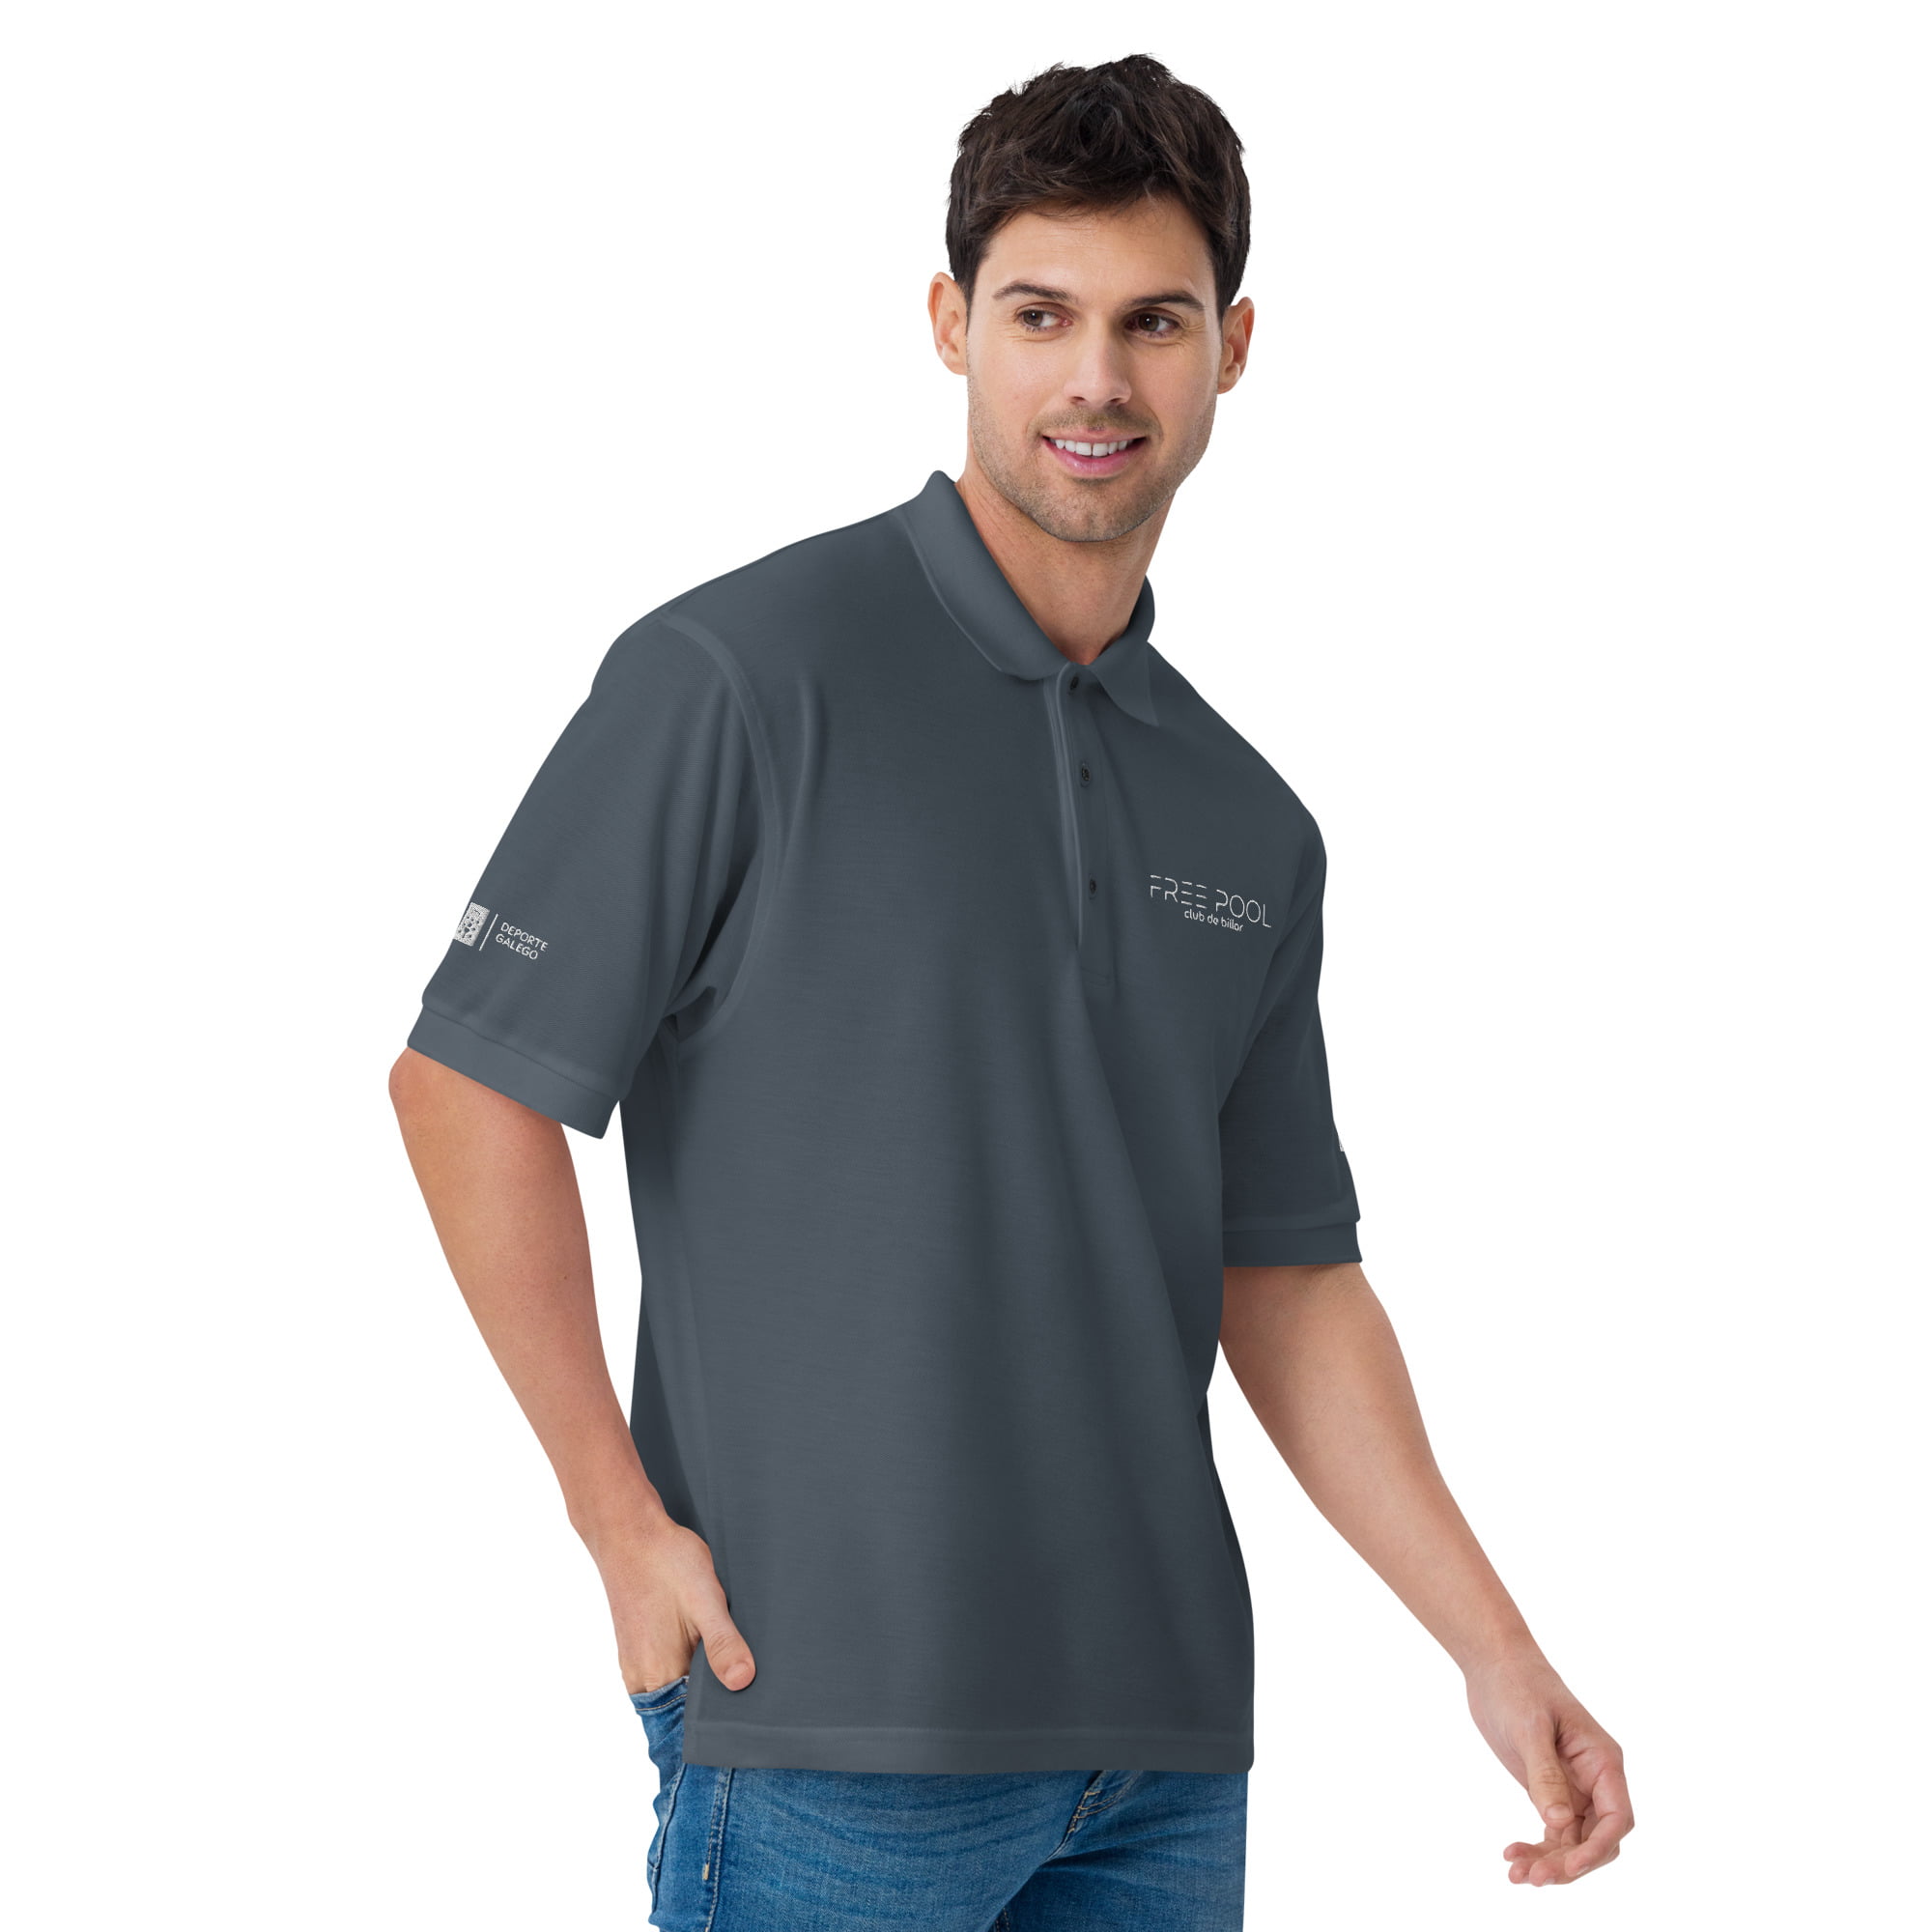 premium-polo-shirt-steel-grey-right-front-64864692e3a03.jpg